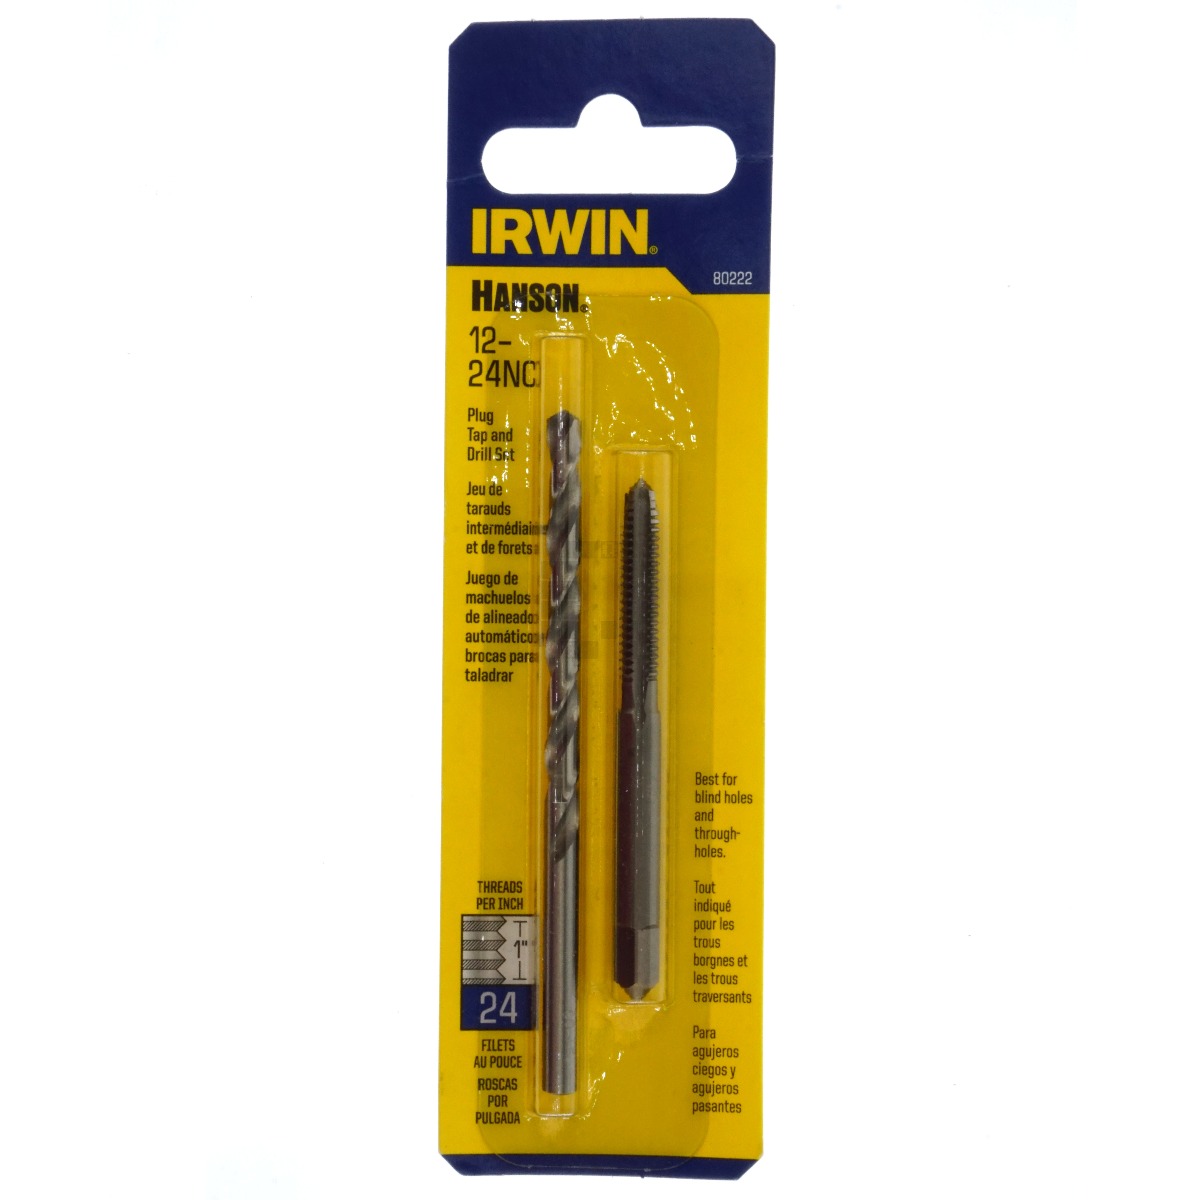 Irwin Hanson 80222 #12-24NC Plug Tap and Drill Bit Set